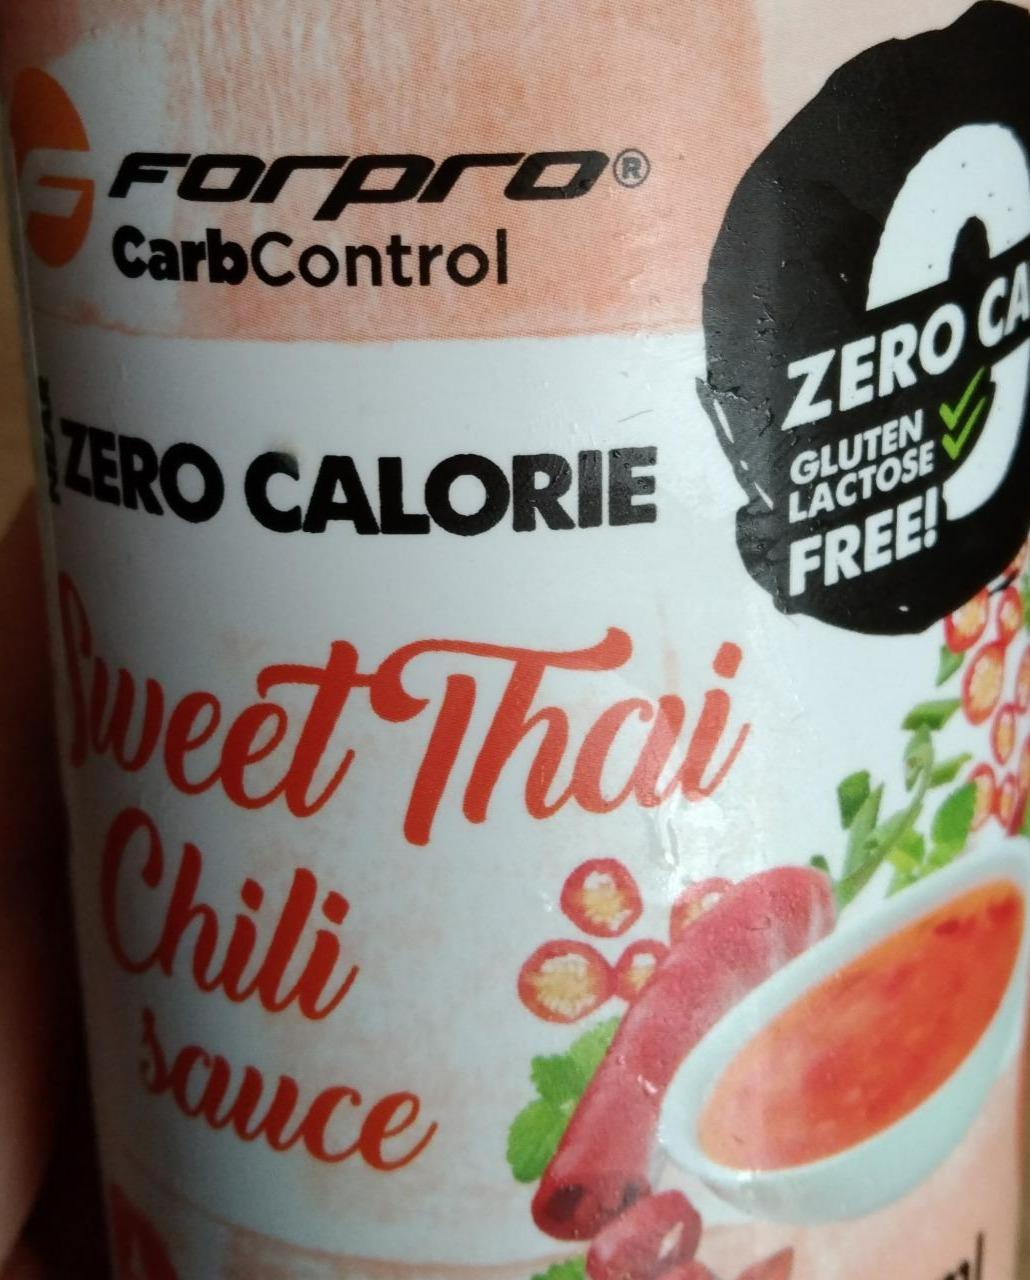 Fotografie - Zero calorie Sweet Thai Chili Forpro